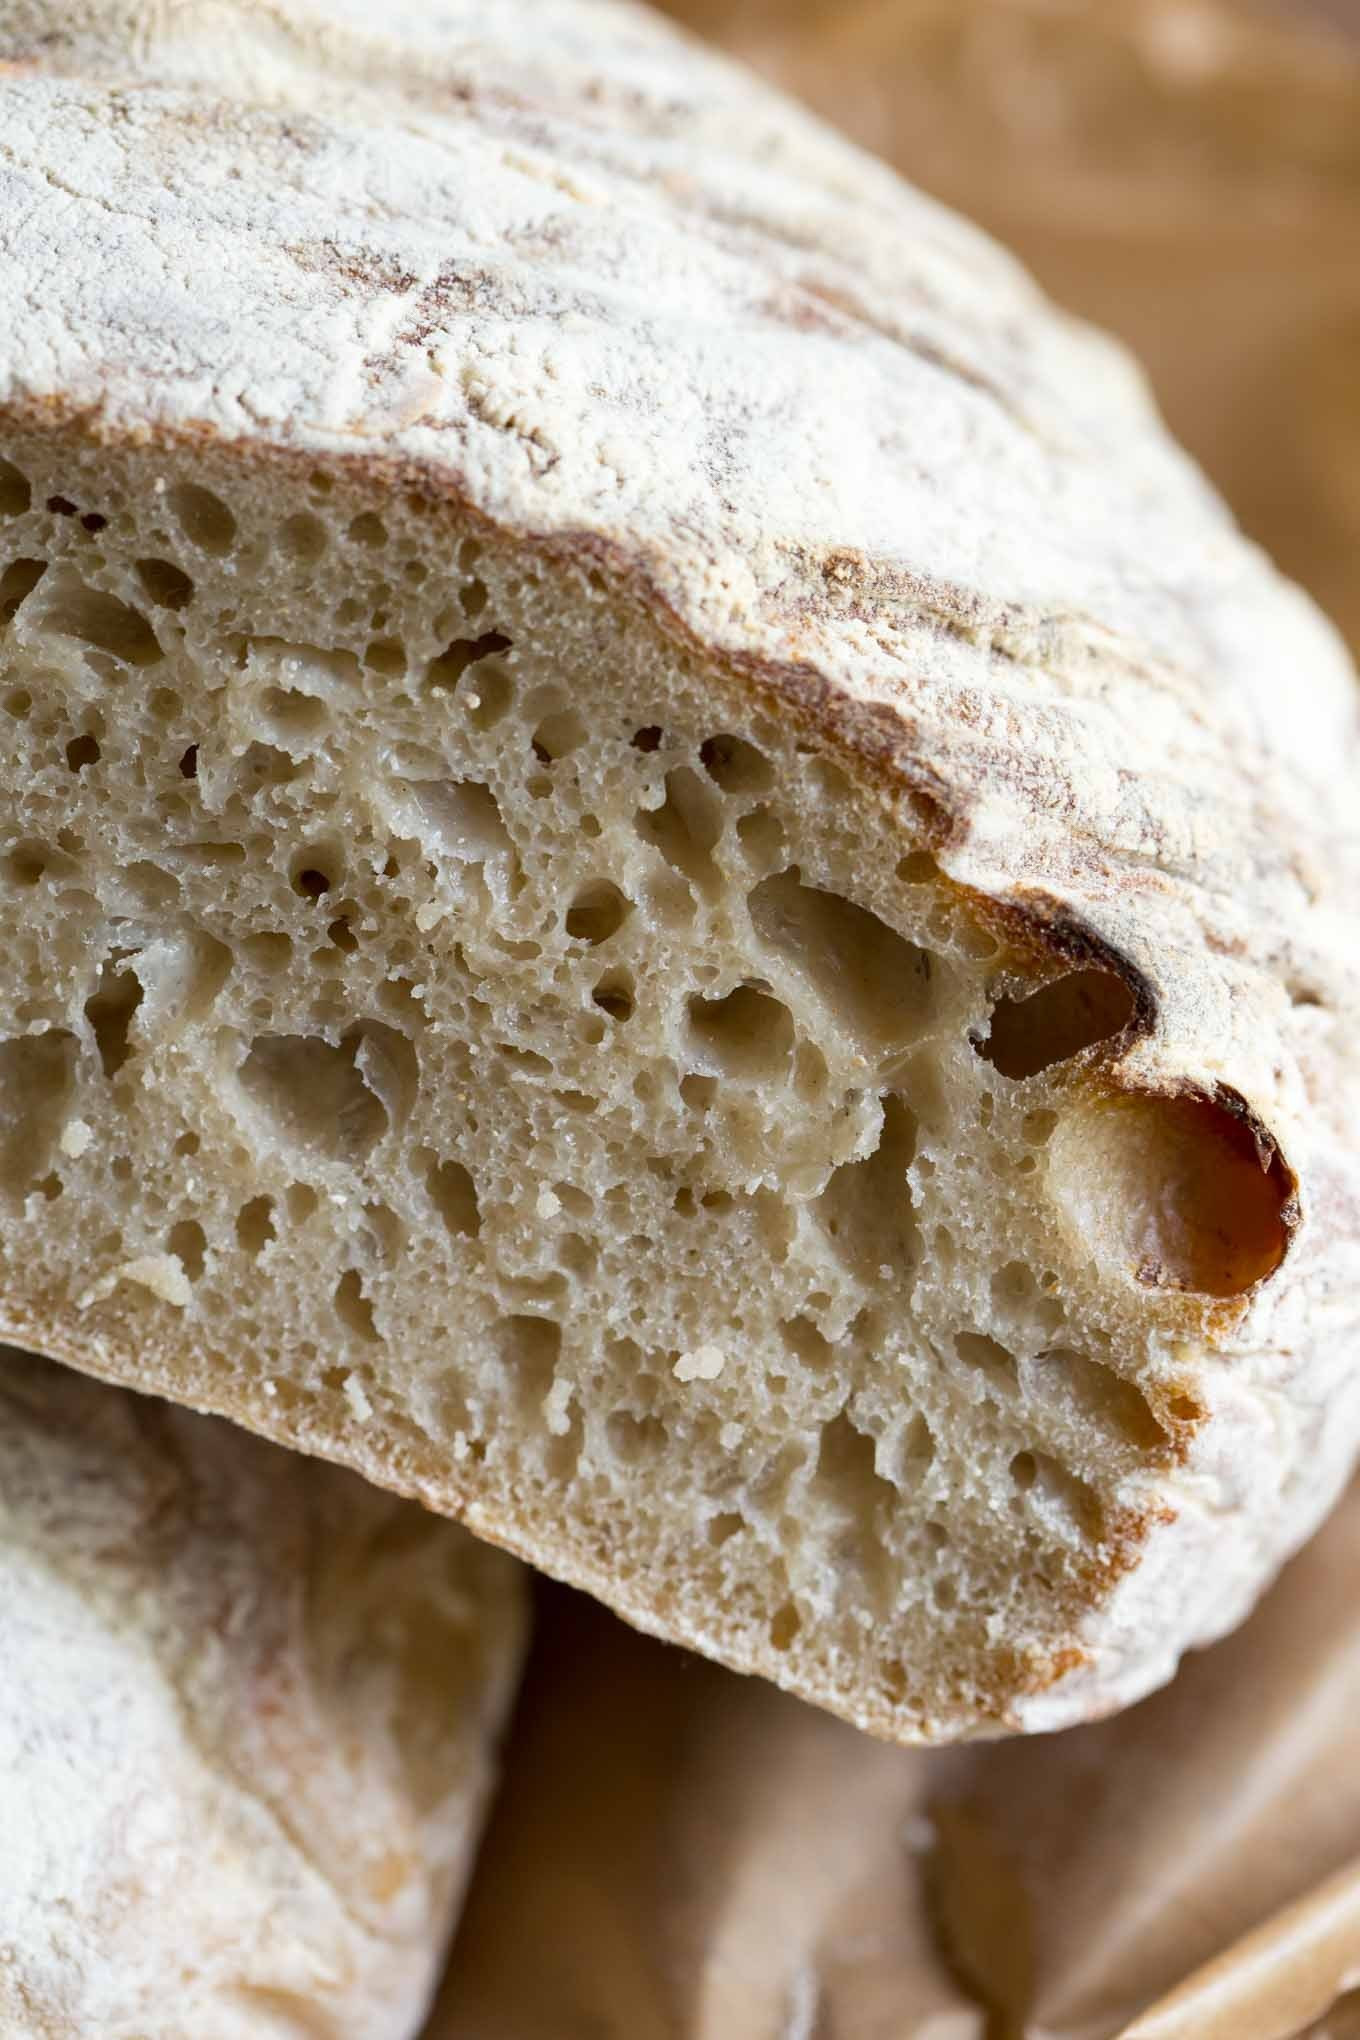 Making Sourdough Bread
 HOW TO MAKE SOURDOUGH BREAD